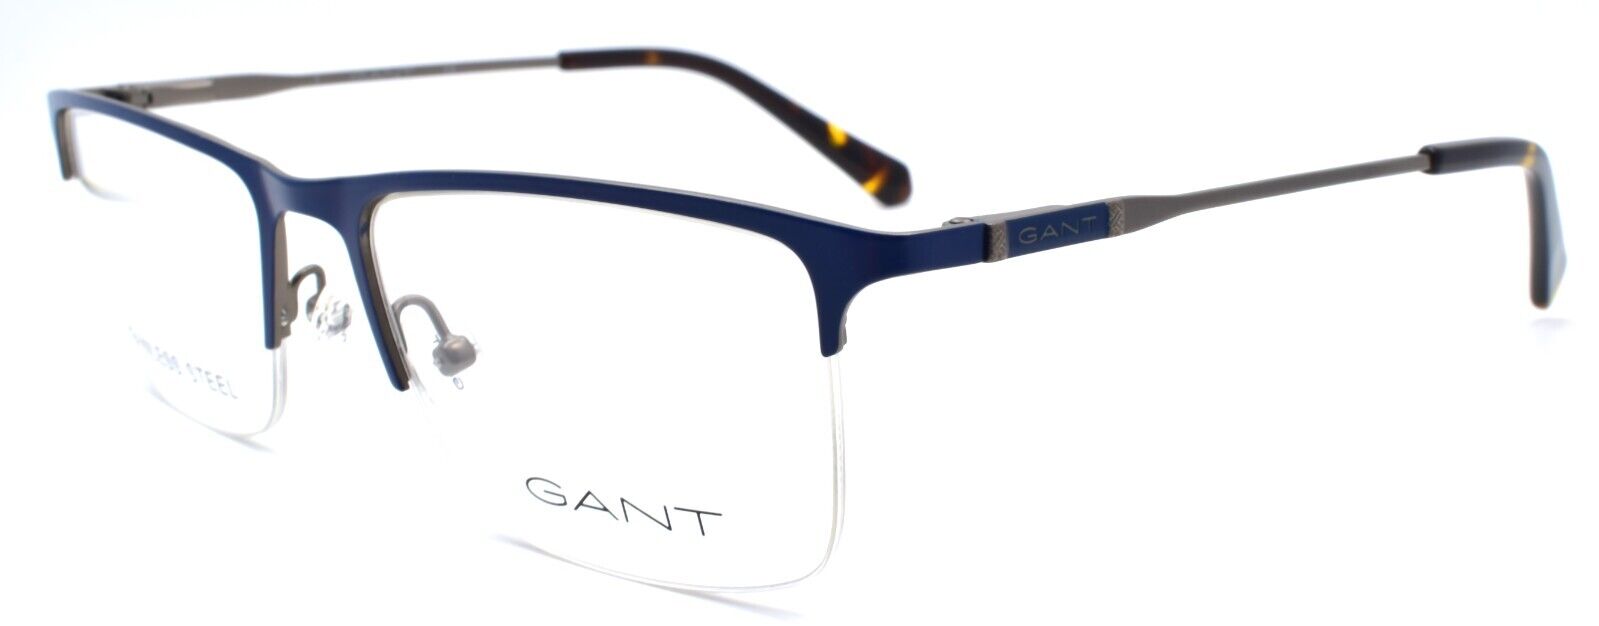 1-GANT GA3243 091 Men's Eyeglasses Frames Half-rim 53-18-140 Matte Blue-889214254641-IKSpecs